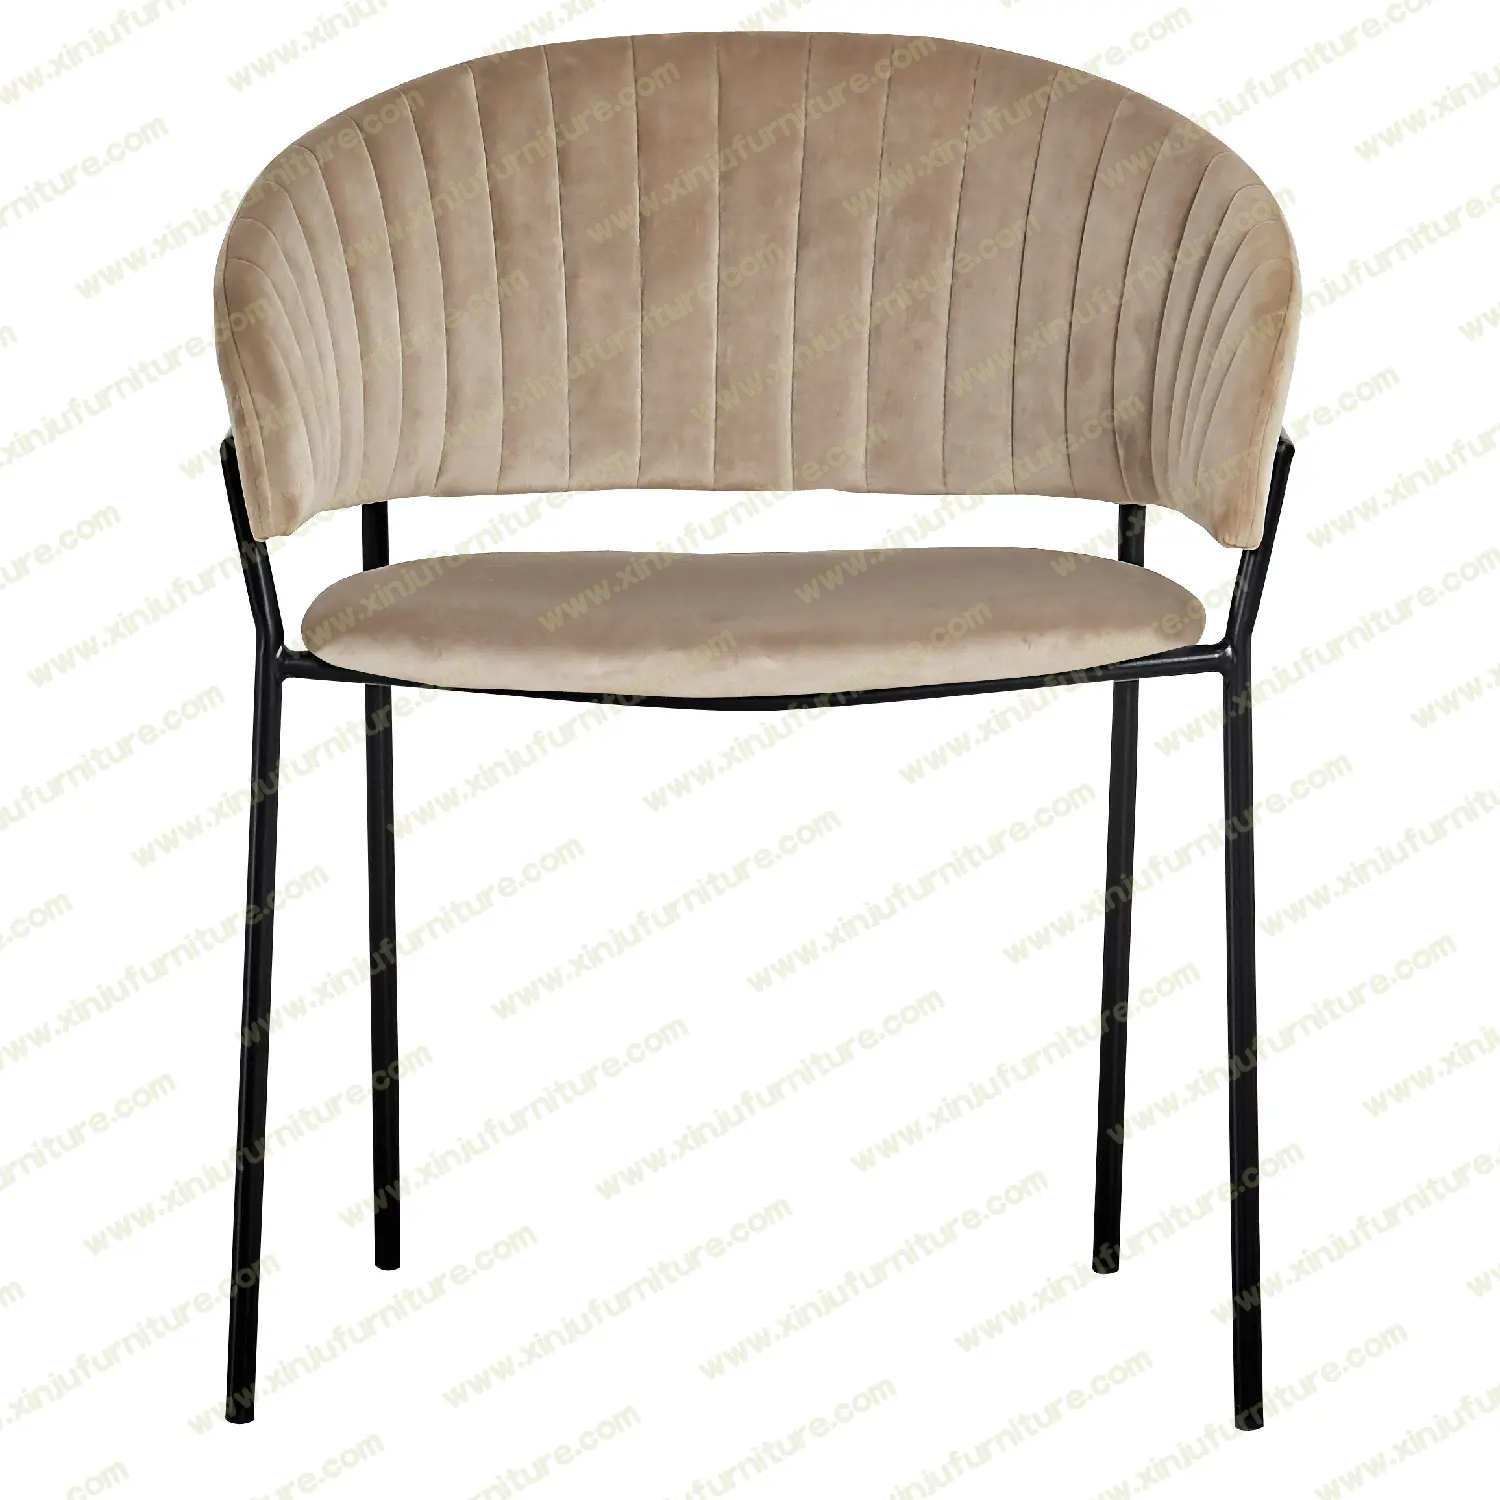 Simple modern Beige dining chair